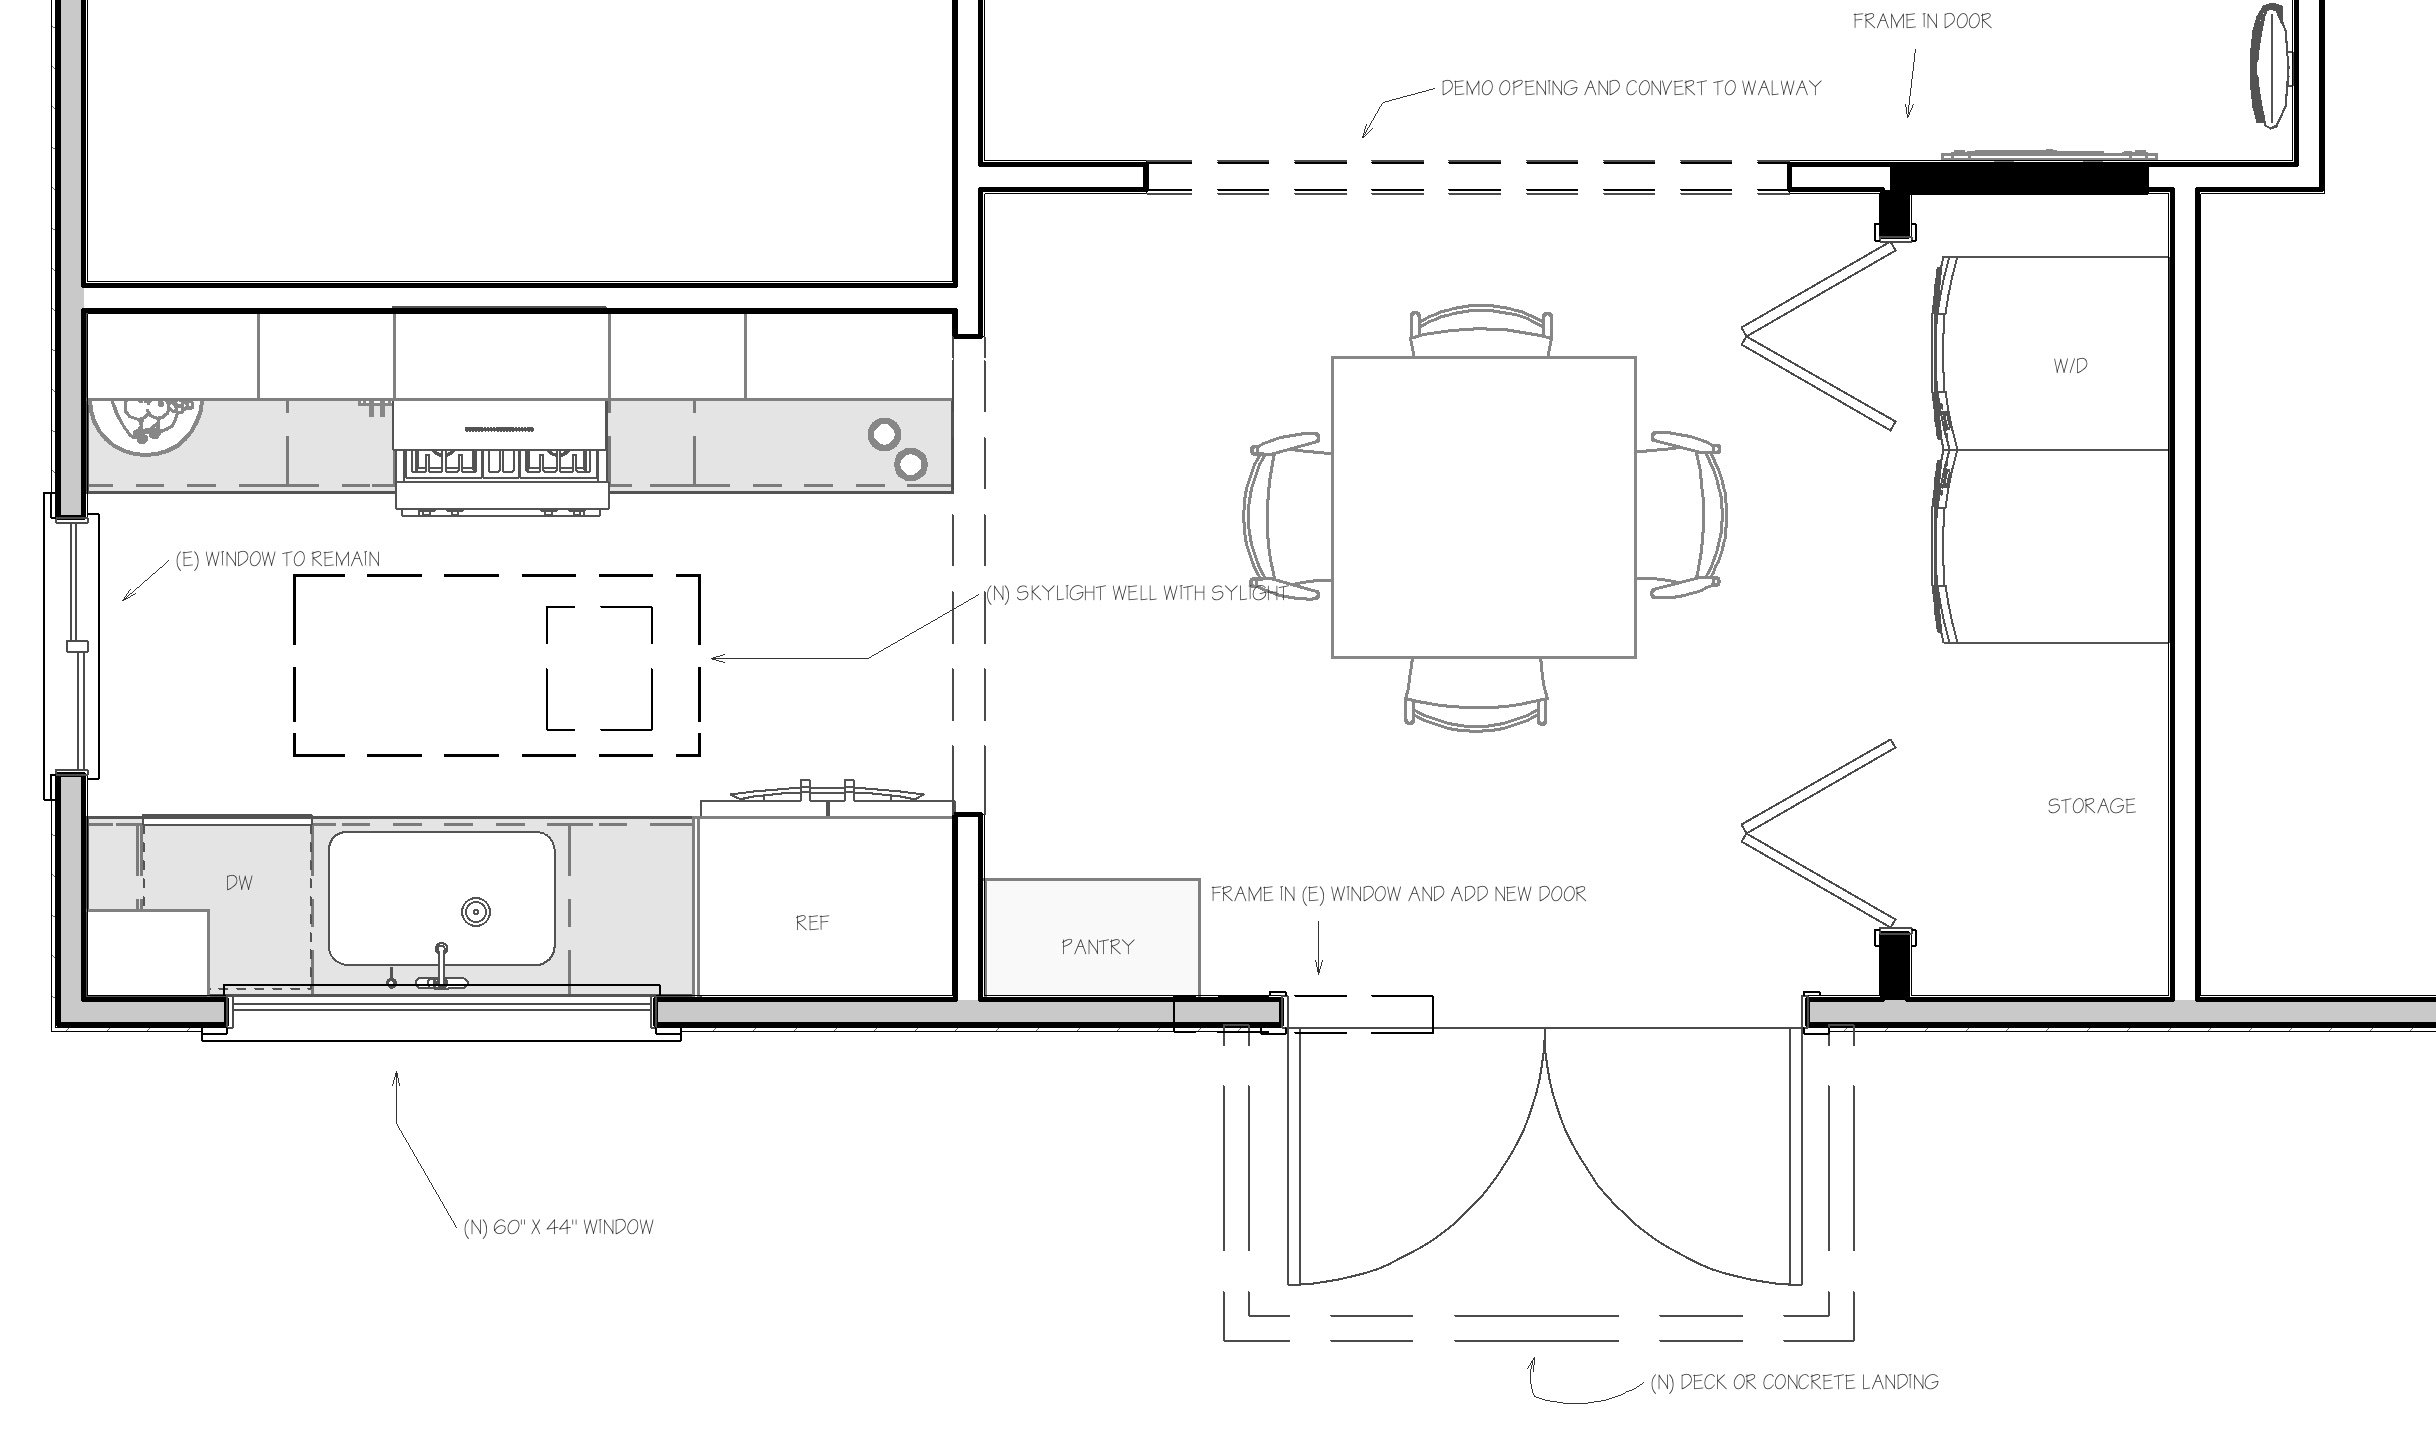 Proposed Floor Plan - NO Addition